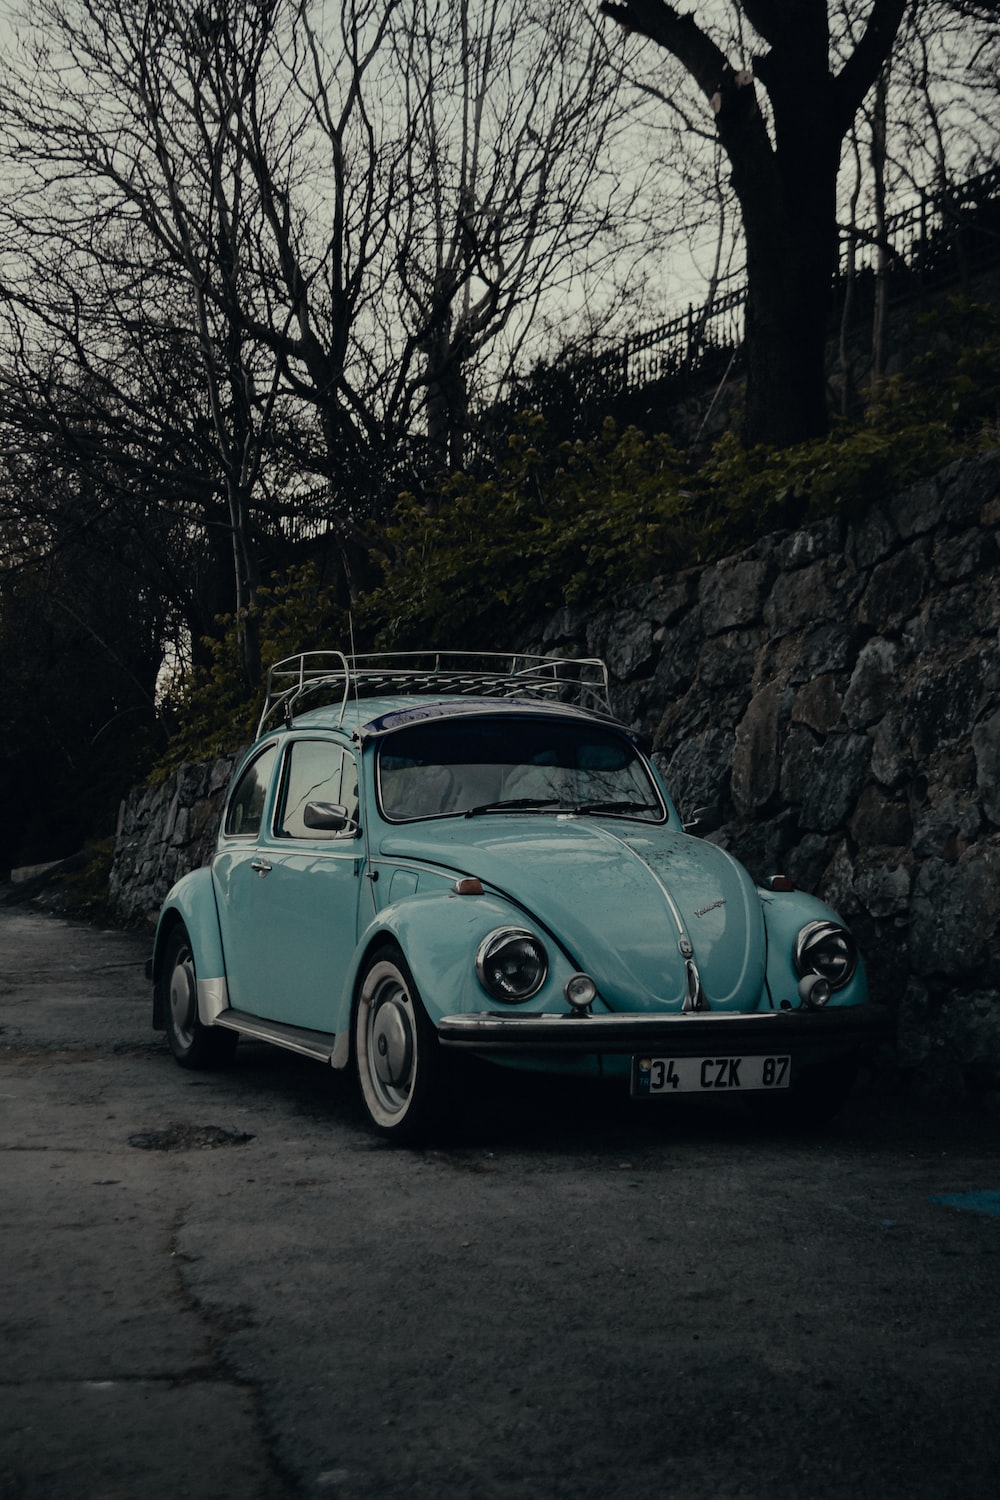 Teal volkswagen beetle parked beside tree photo â free vintage car image on